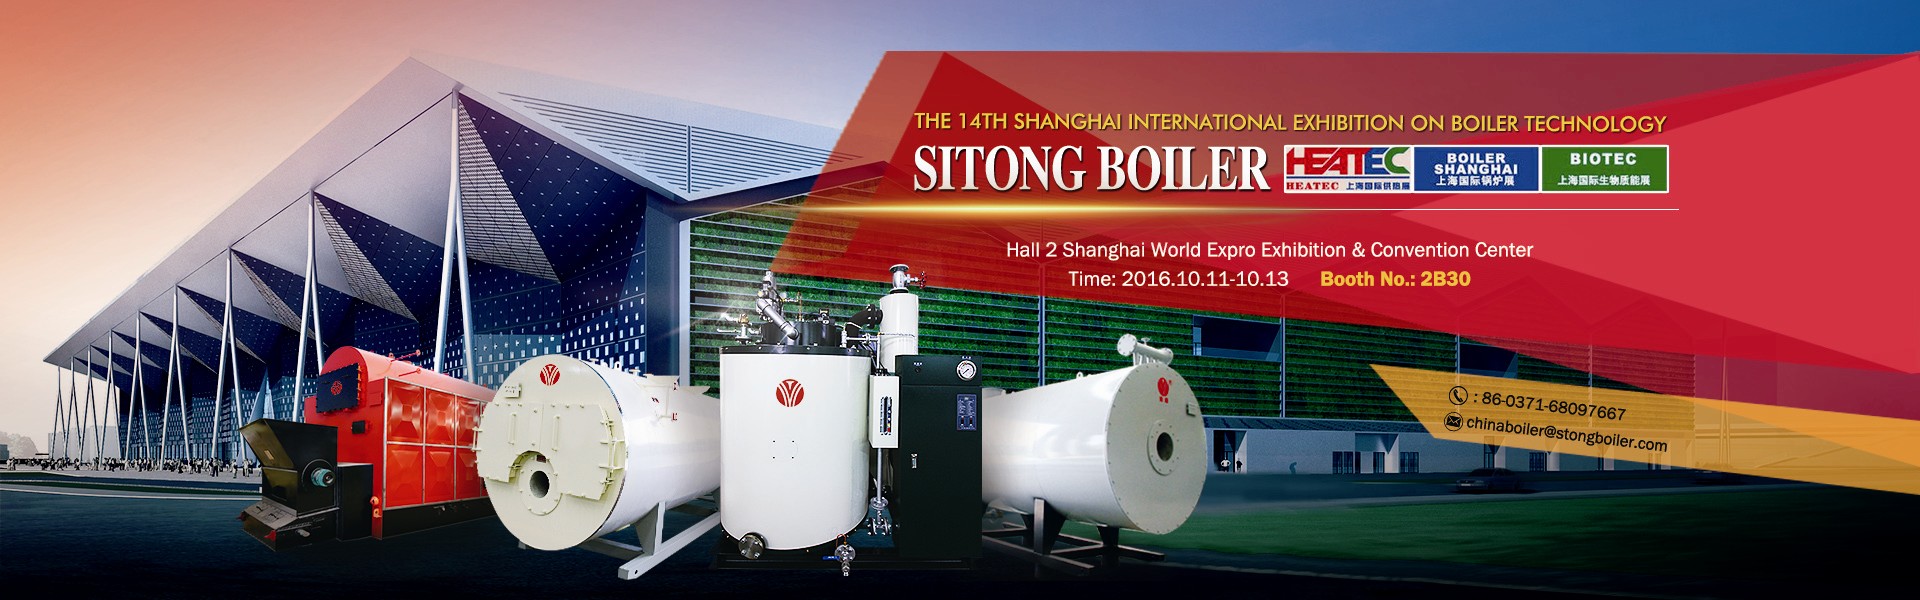 Sitong Boiler Co. Ltd. te invita a la  Exposición de Tecnología de Shanghai Boiler 2016